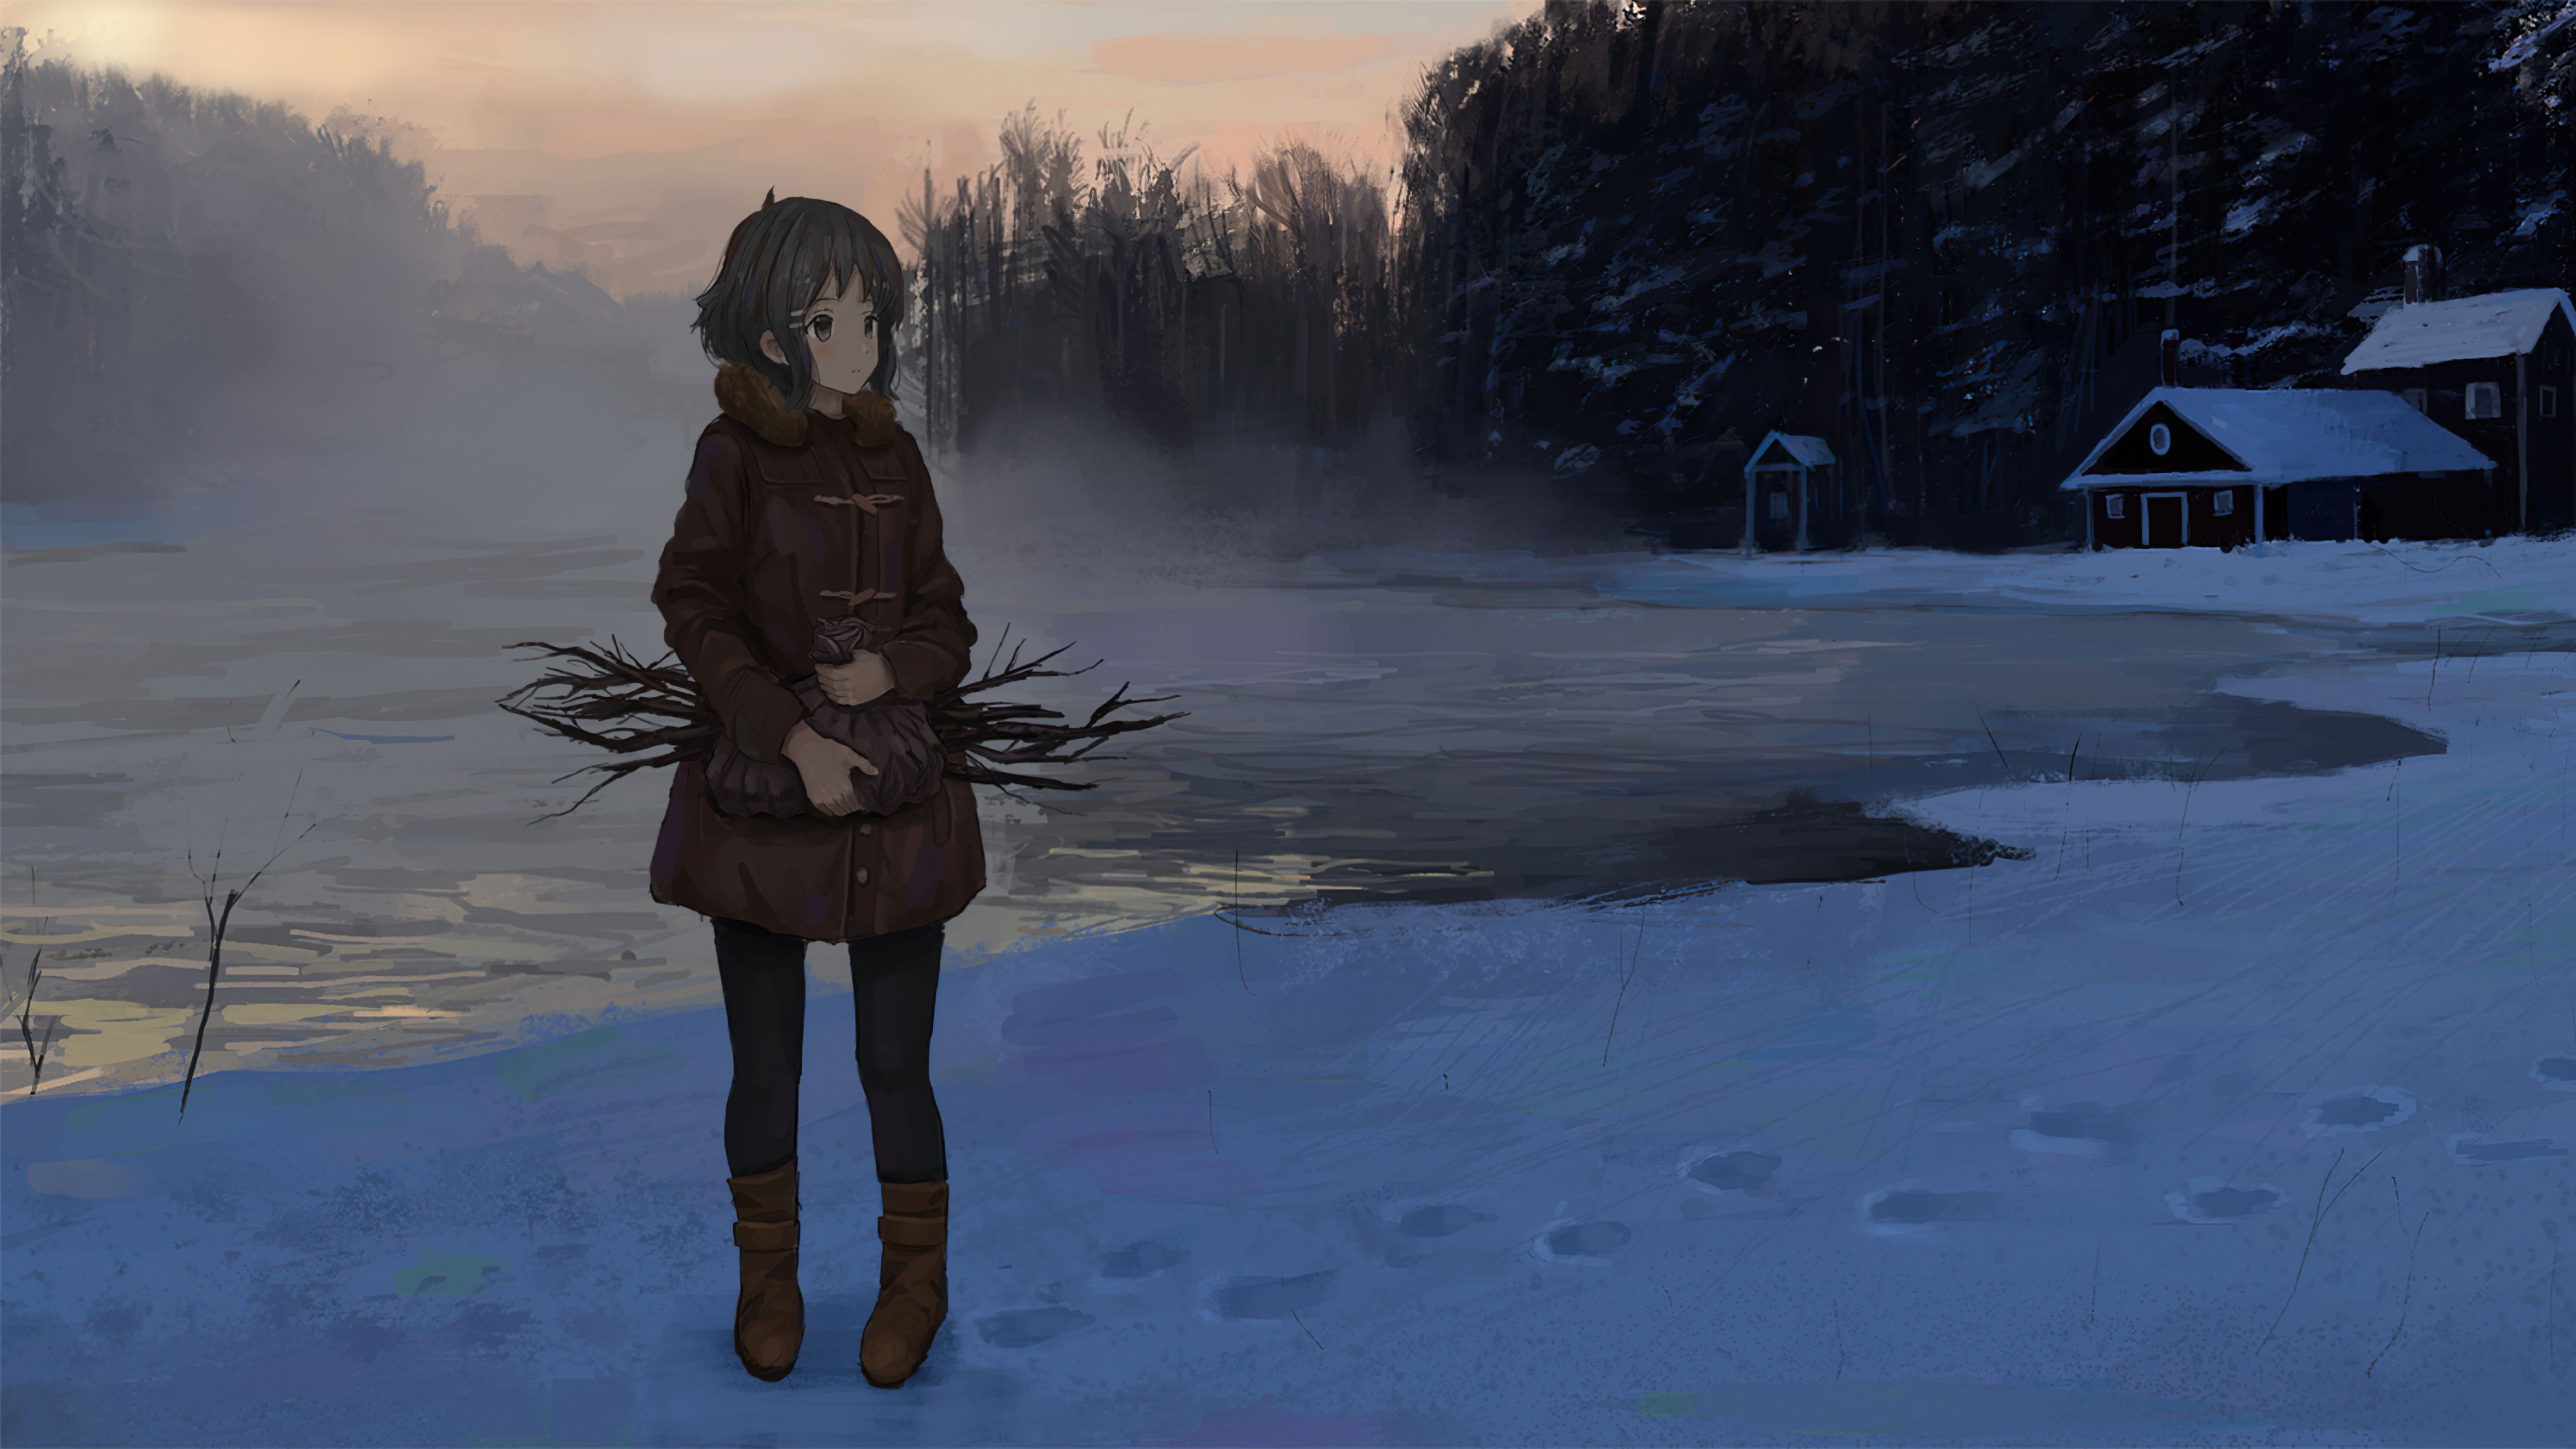 Anime Girl in Winter 5K Wallpaper, HD Anime 4K Wallpaper, Image, Photo and Background